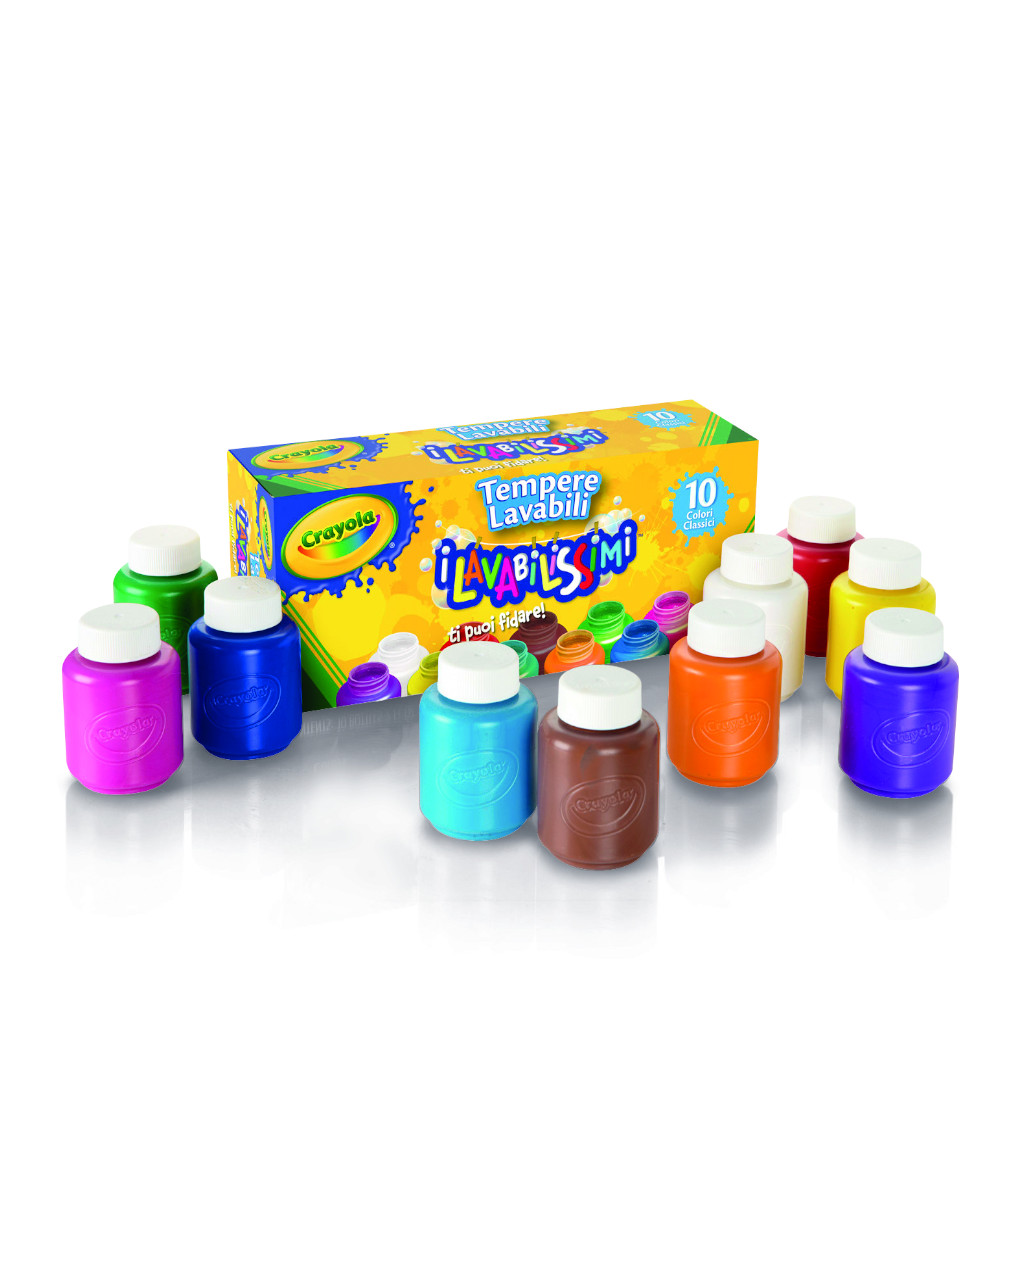 Crayola - 10 tintas laváveis - Crayola